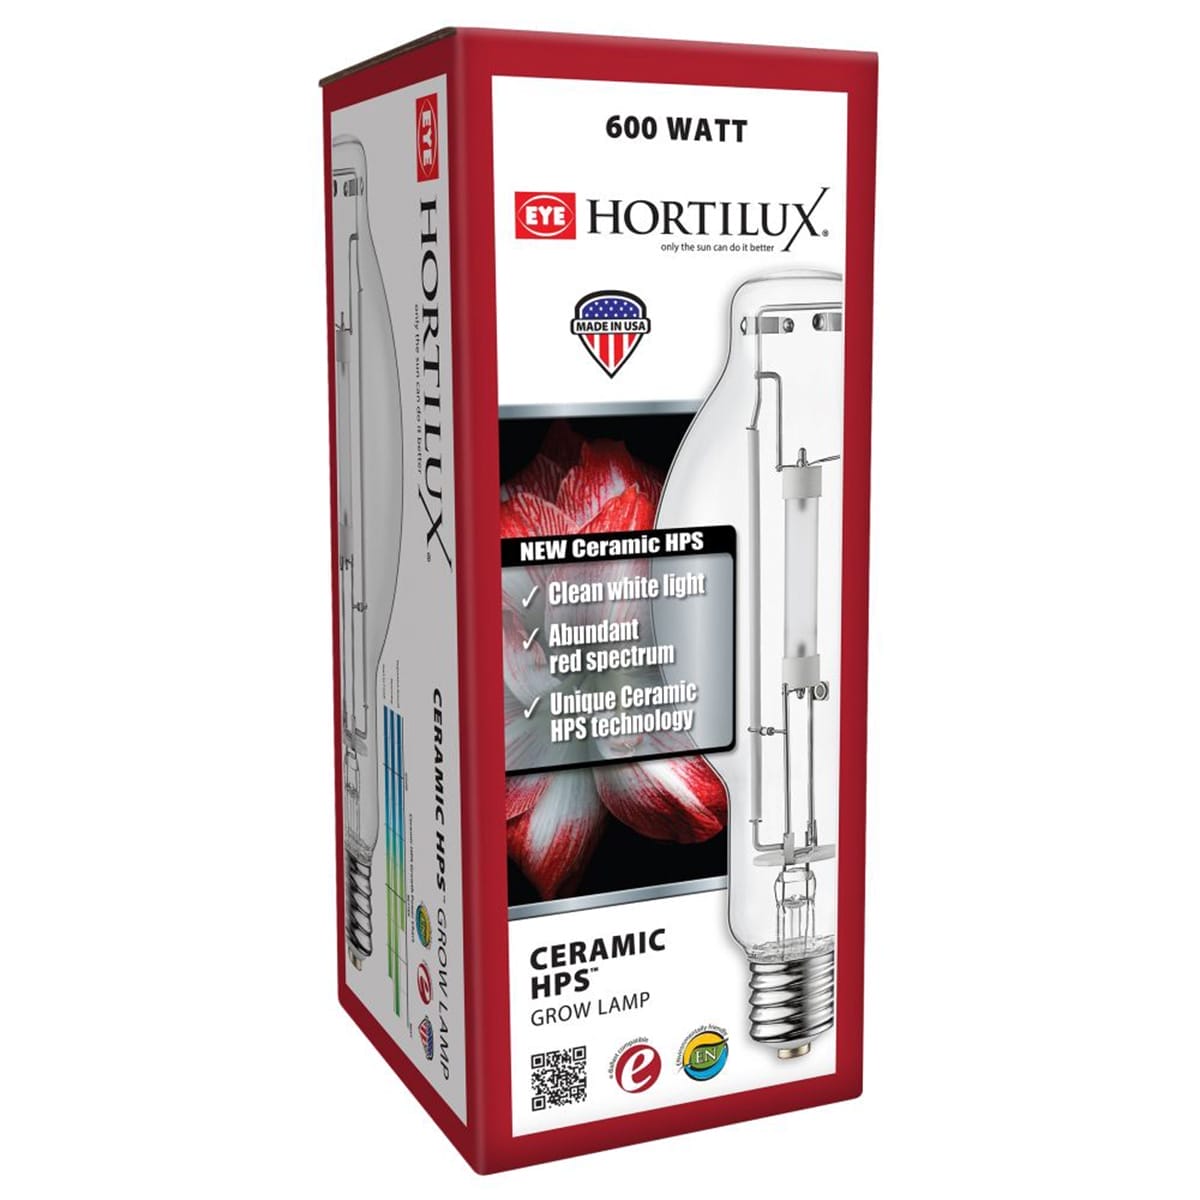 Eye Hortilux 600w Ceramic HPS Grow Light Bulb | HTG Supply Hydroponics u0026  Grow Lights